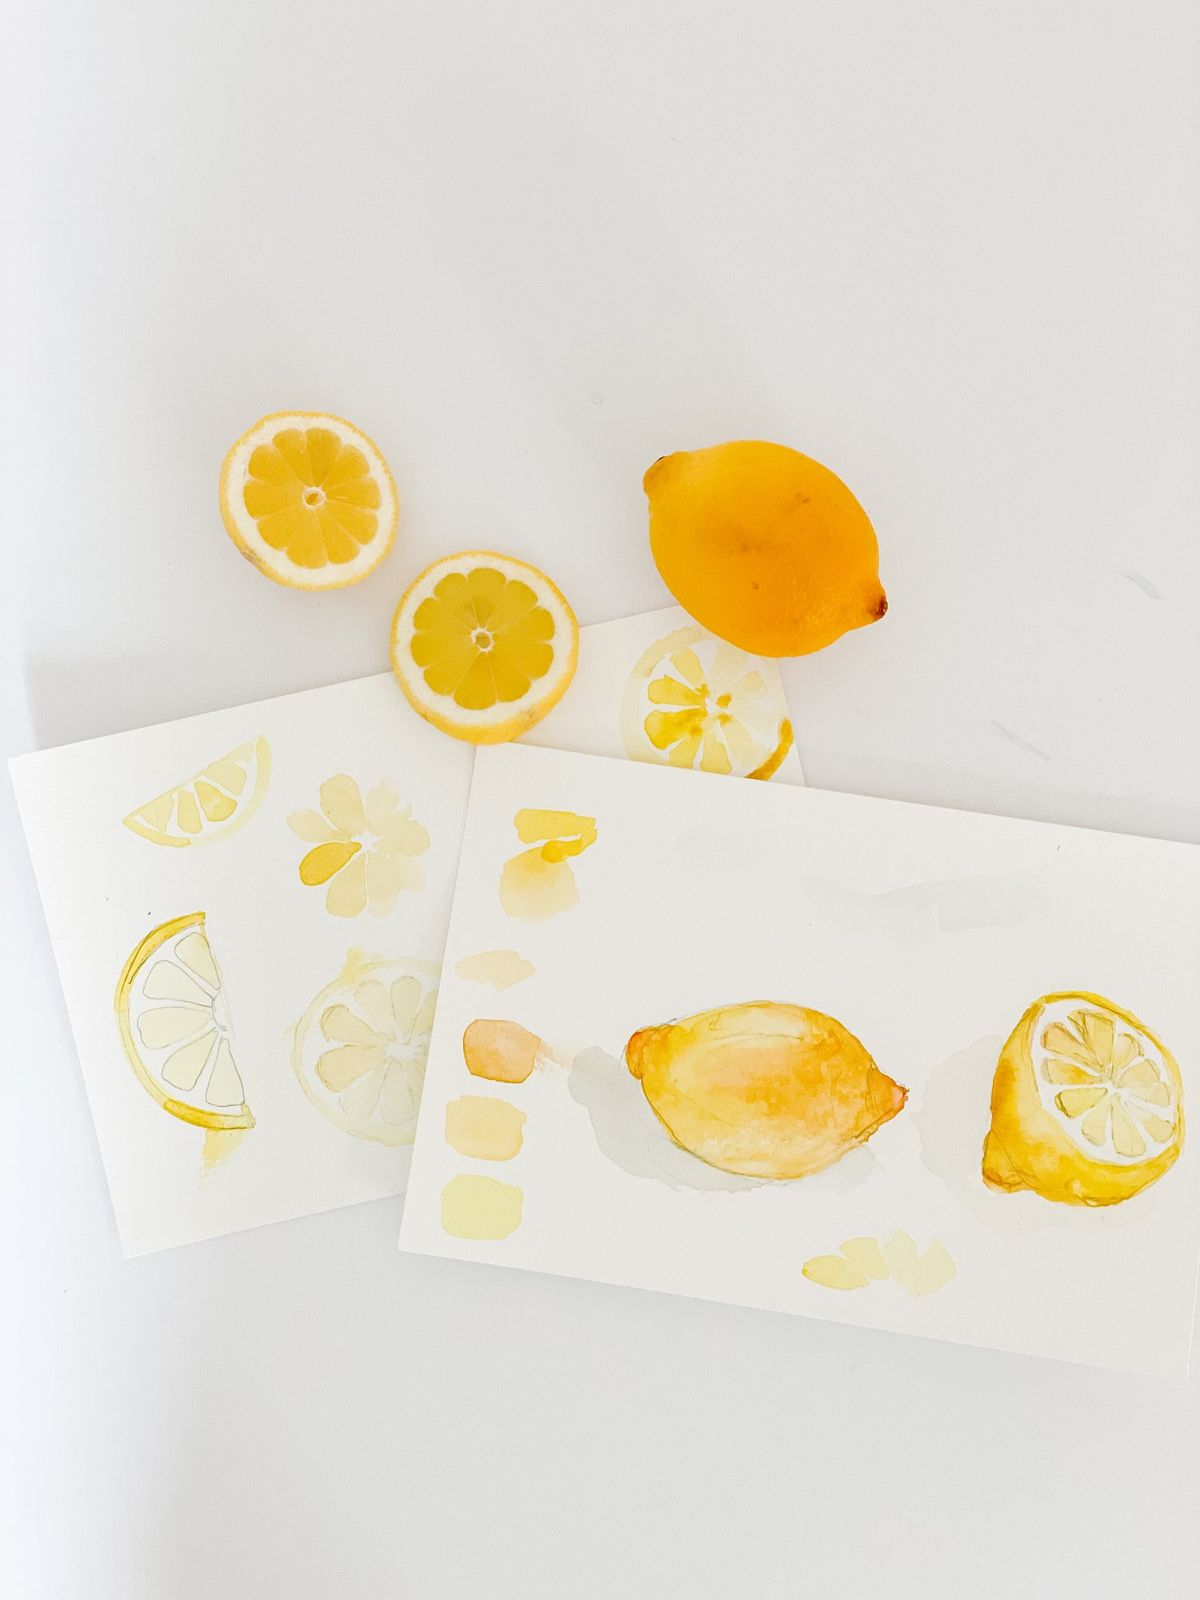 [Workshop] Citrus in Watercolor with LaCott Fine Art